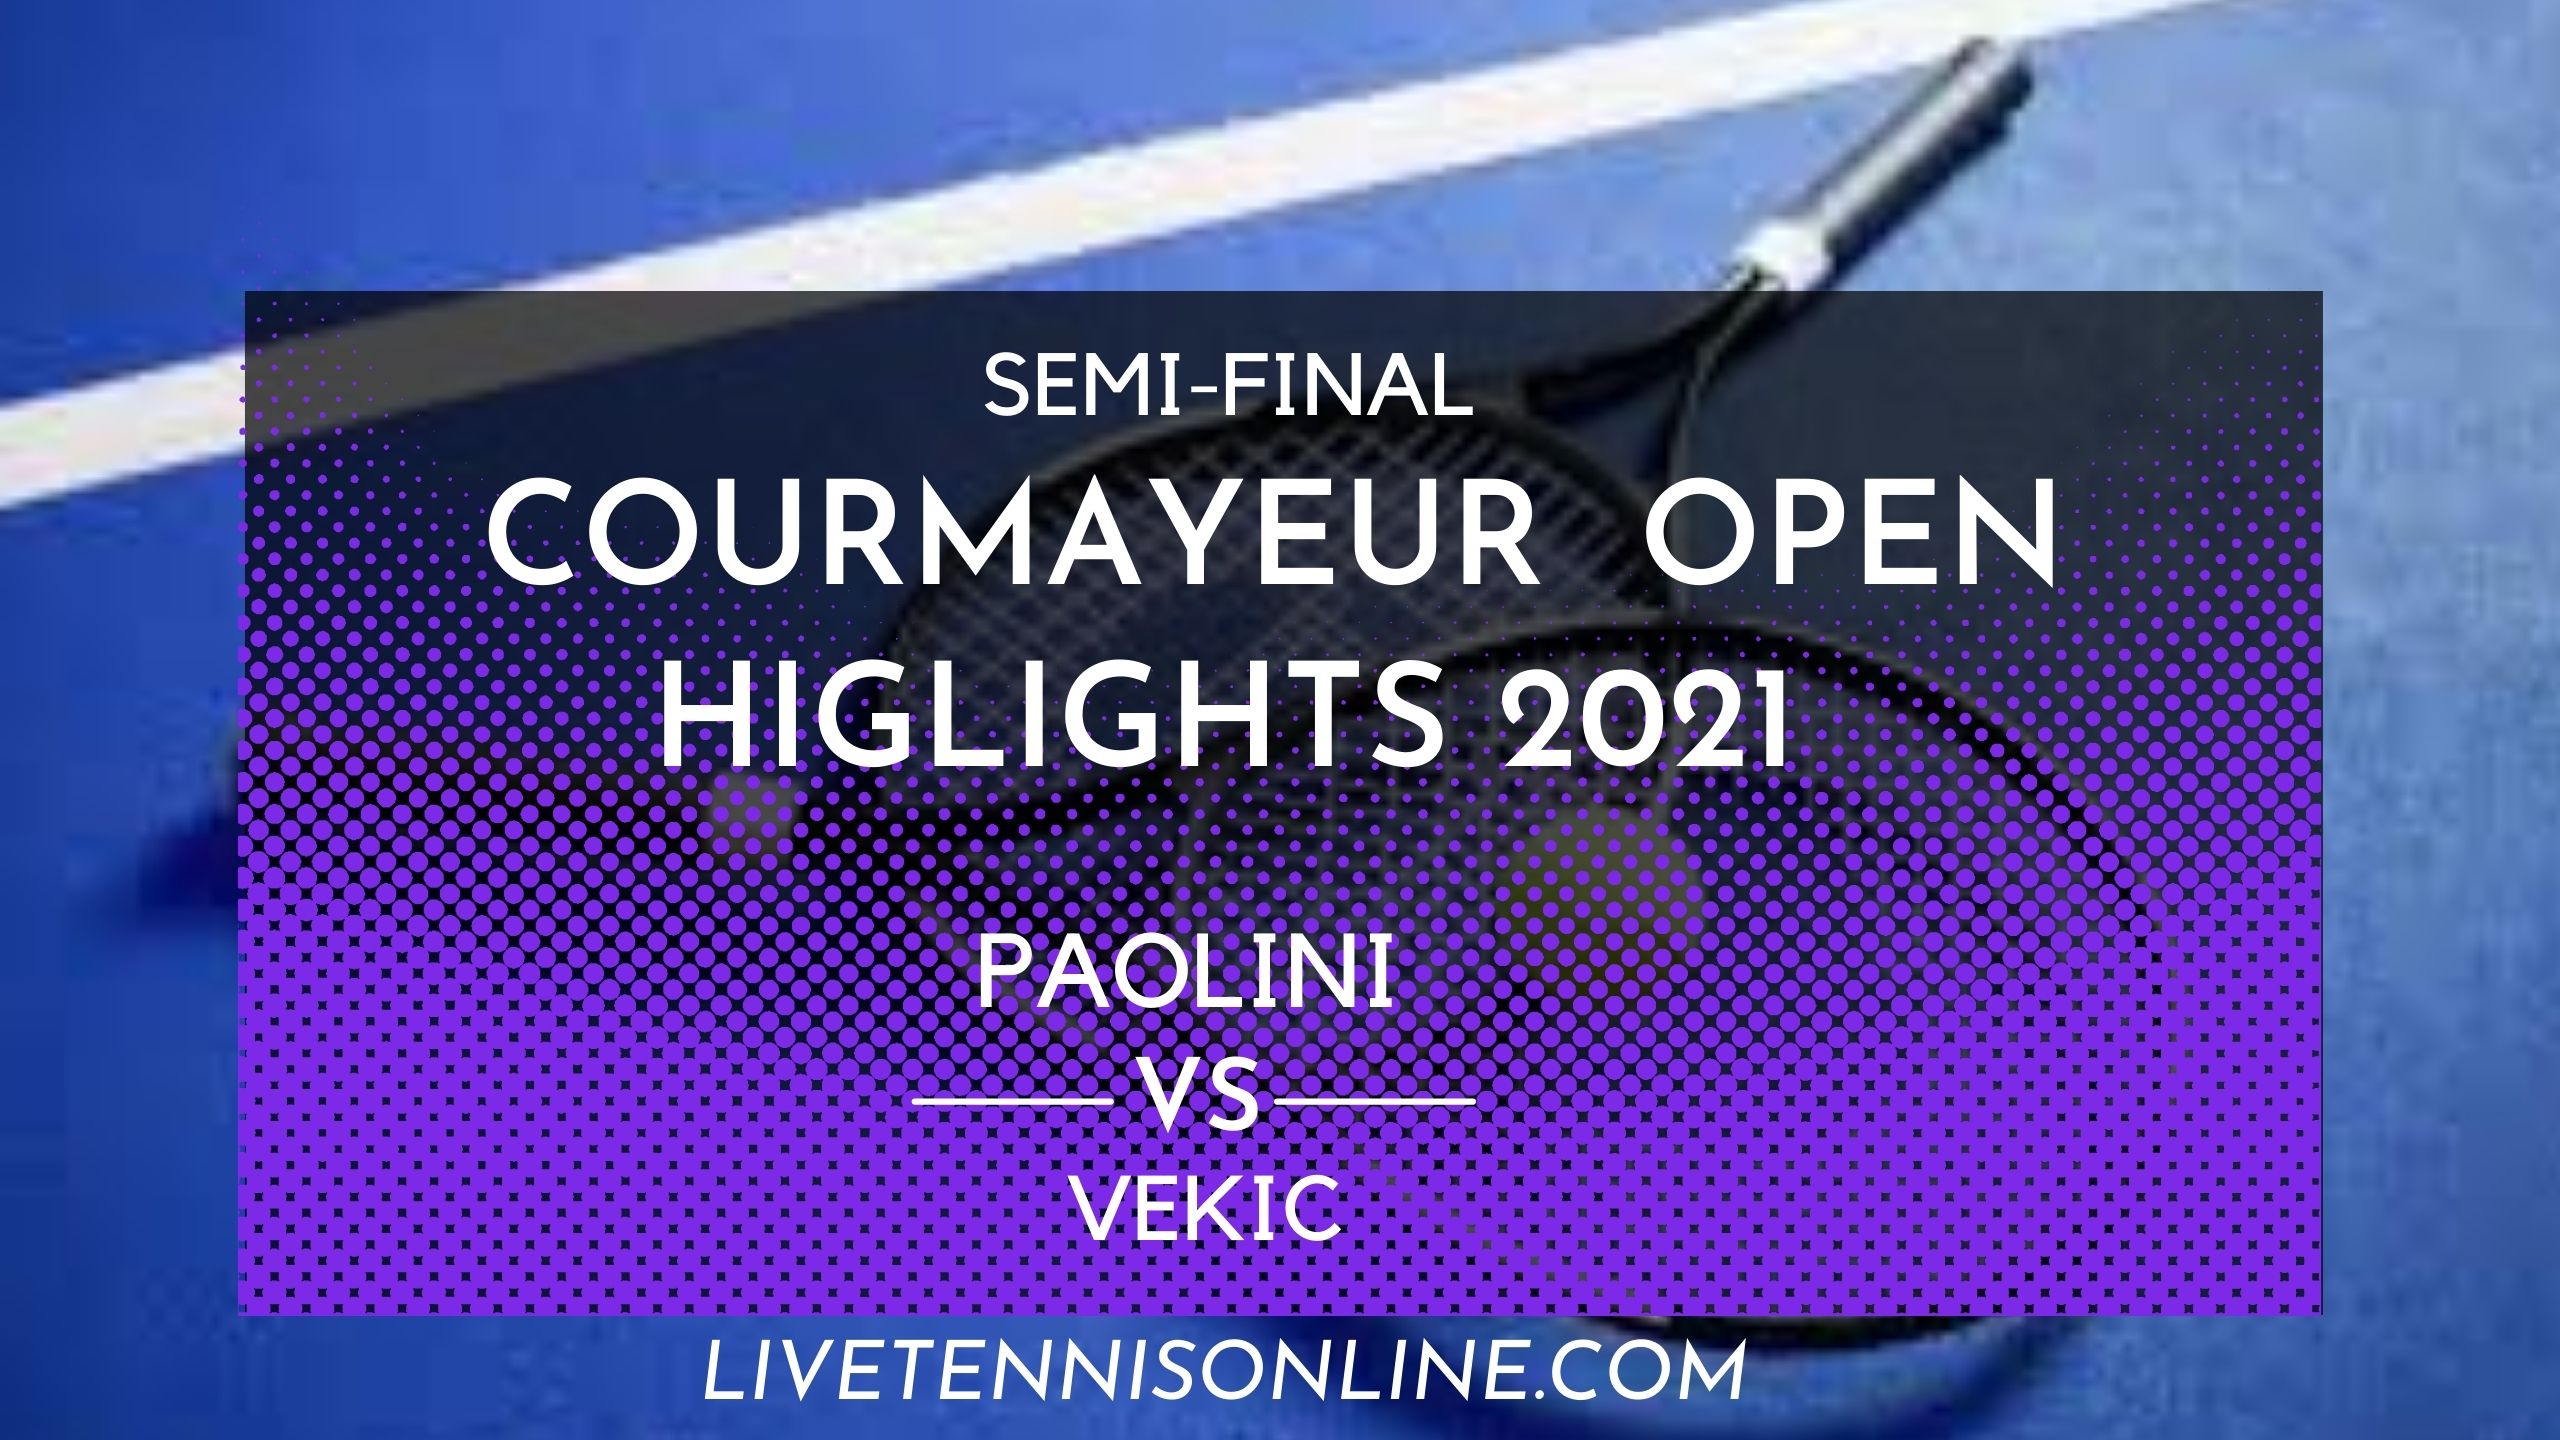 Paolini Vs Vekic SF Highlights 2021 Courmayeur Open